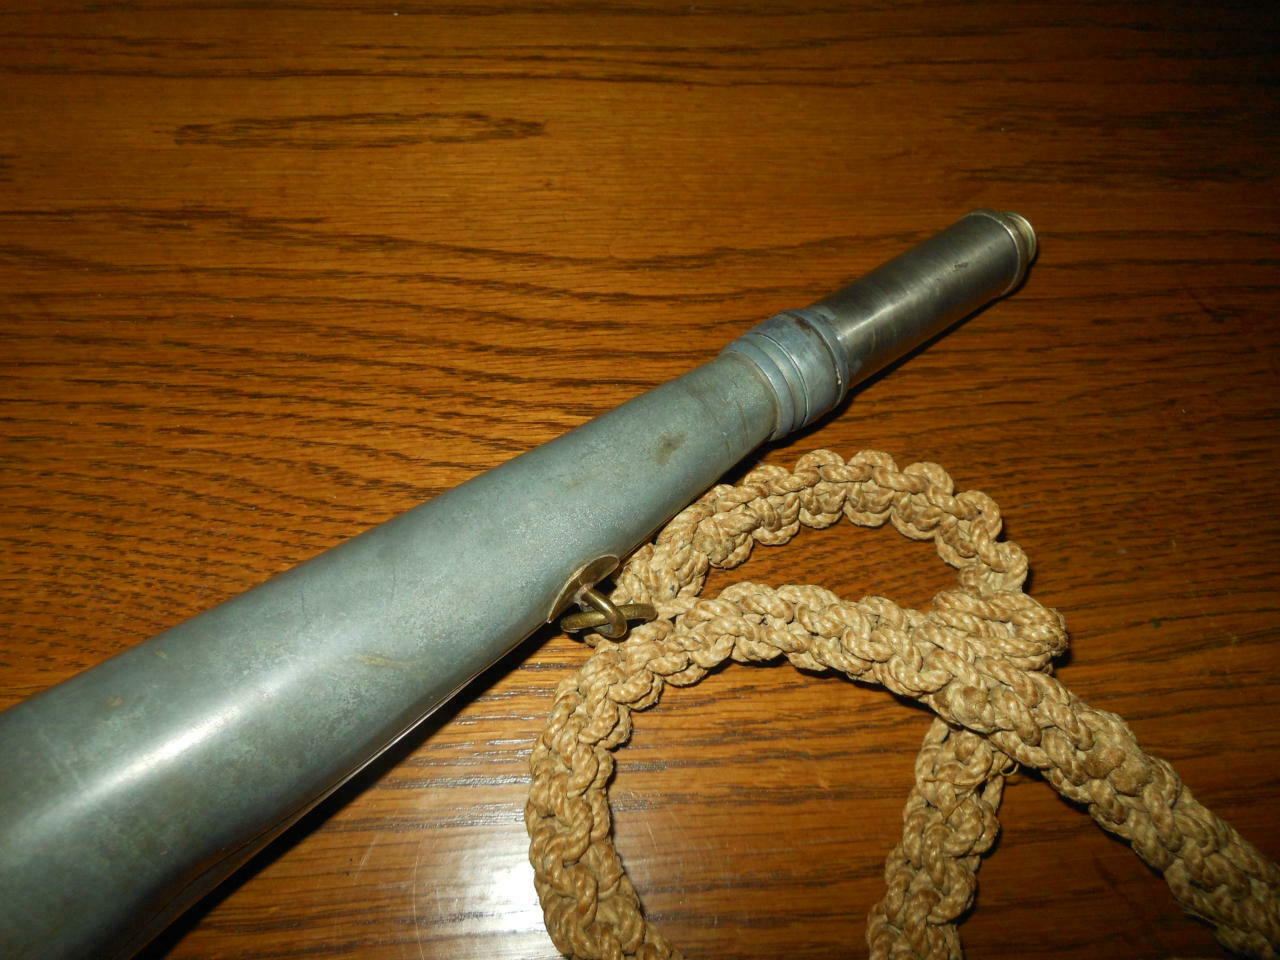 German signalhorn (signal bugle) 1940. – Rurfront Militaria